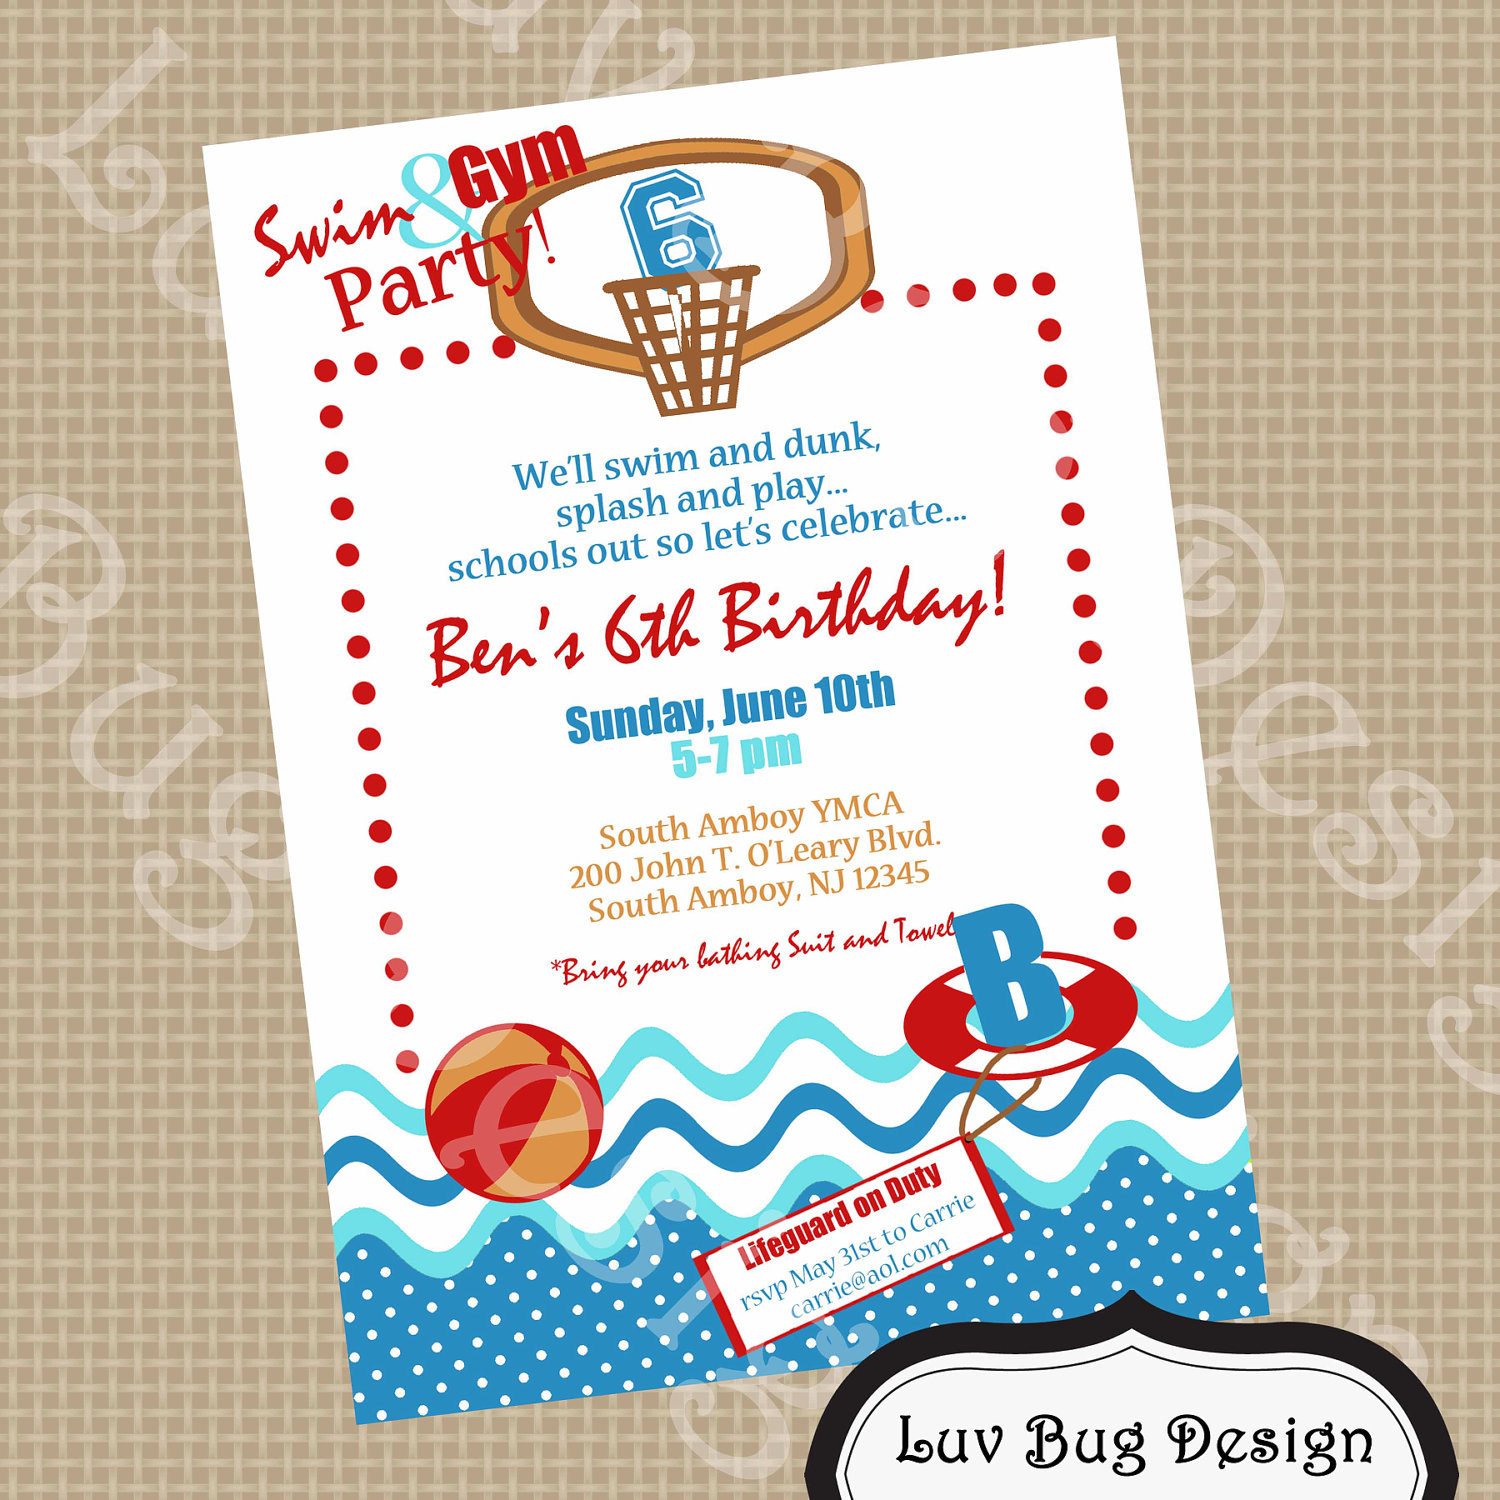 Swimming Birthday Party Invitations
 PRINTABLE Swim & Gym Birthday Party Invite by luvbugdesign